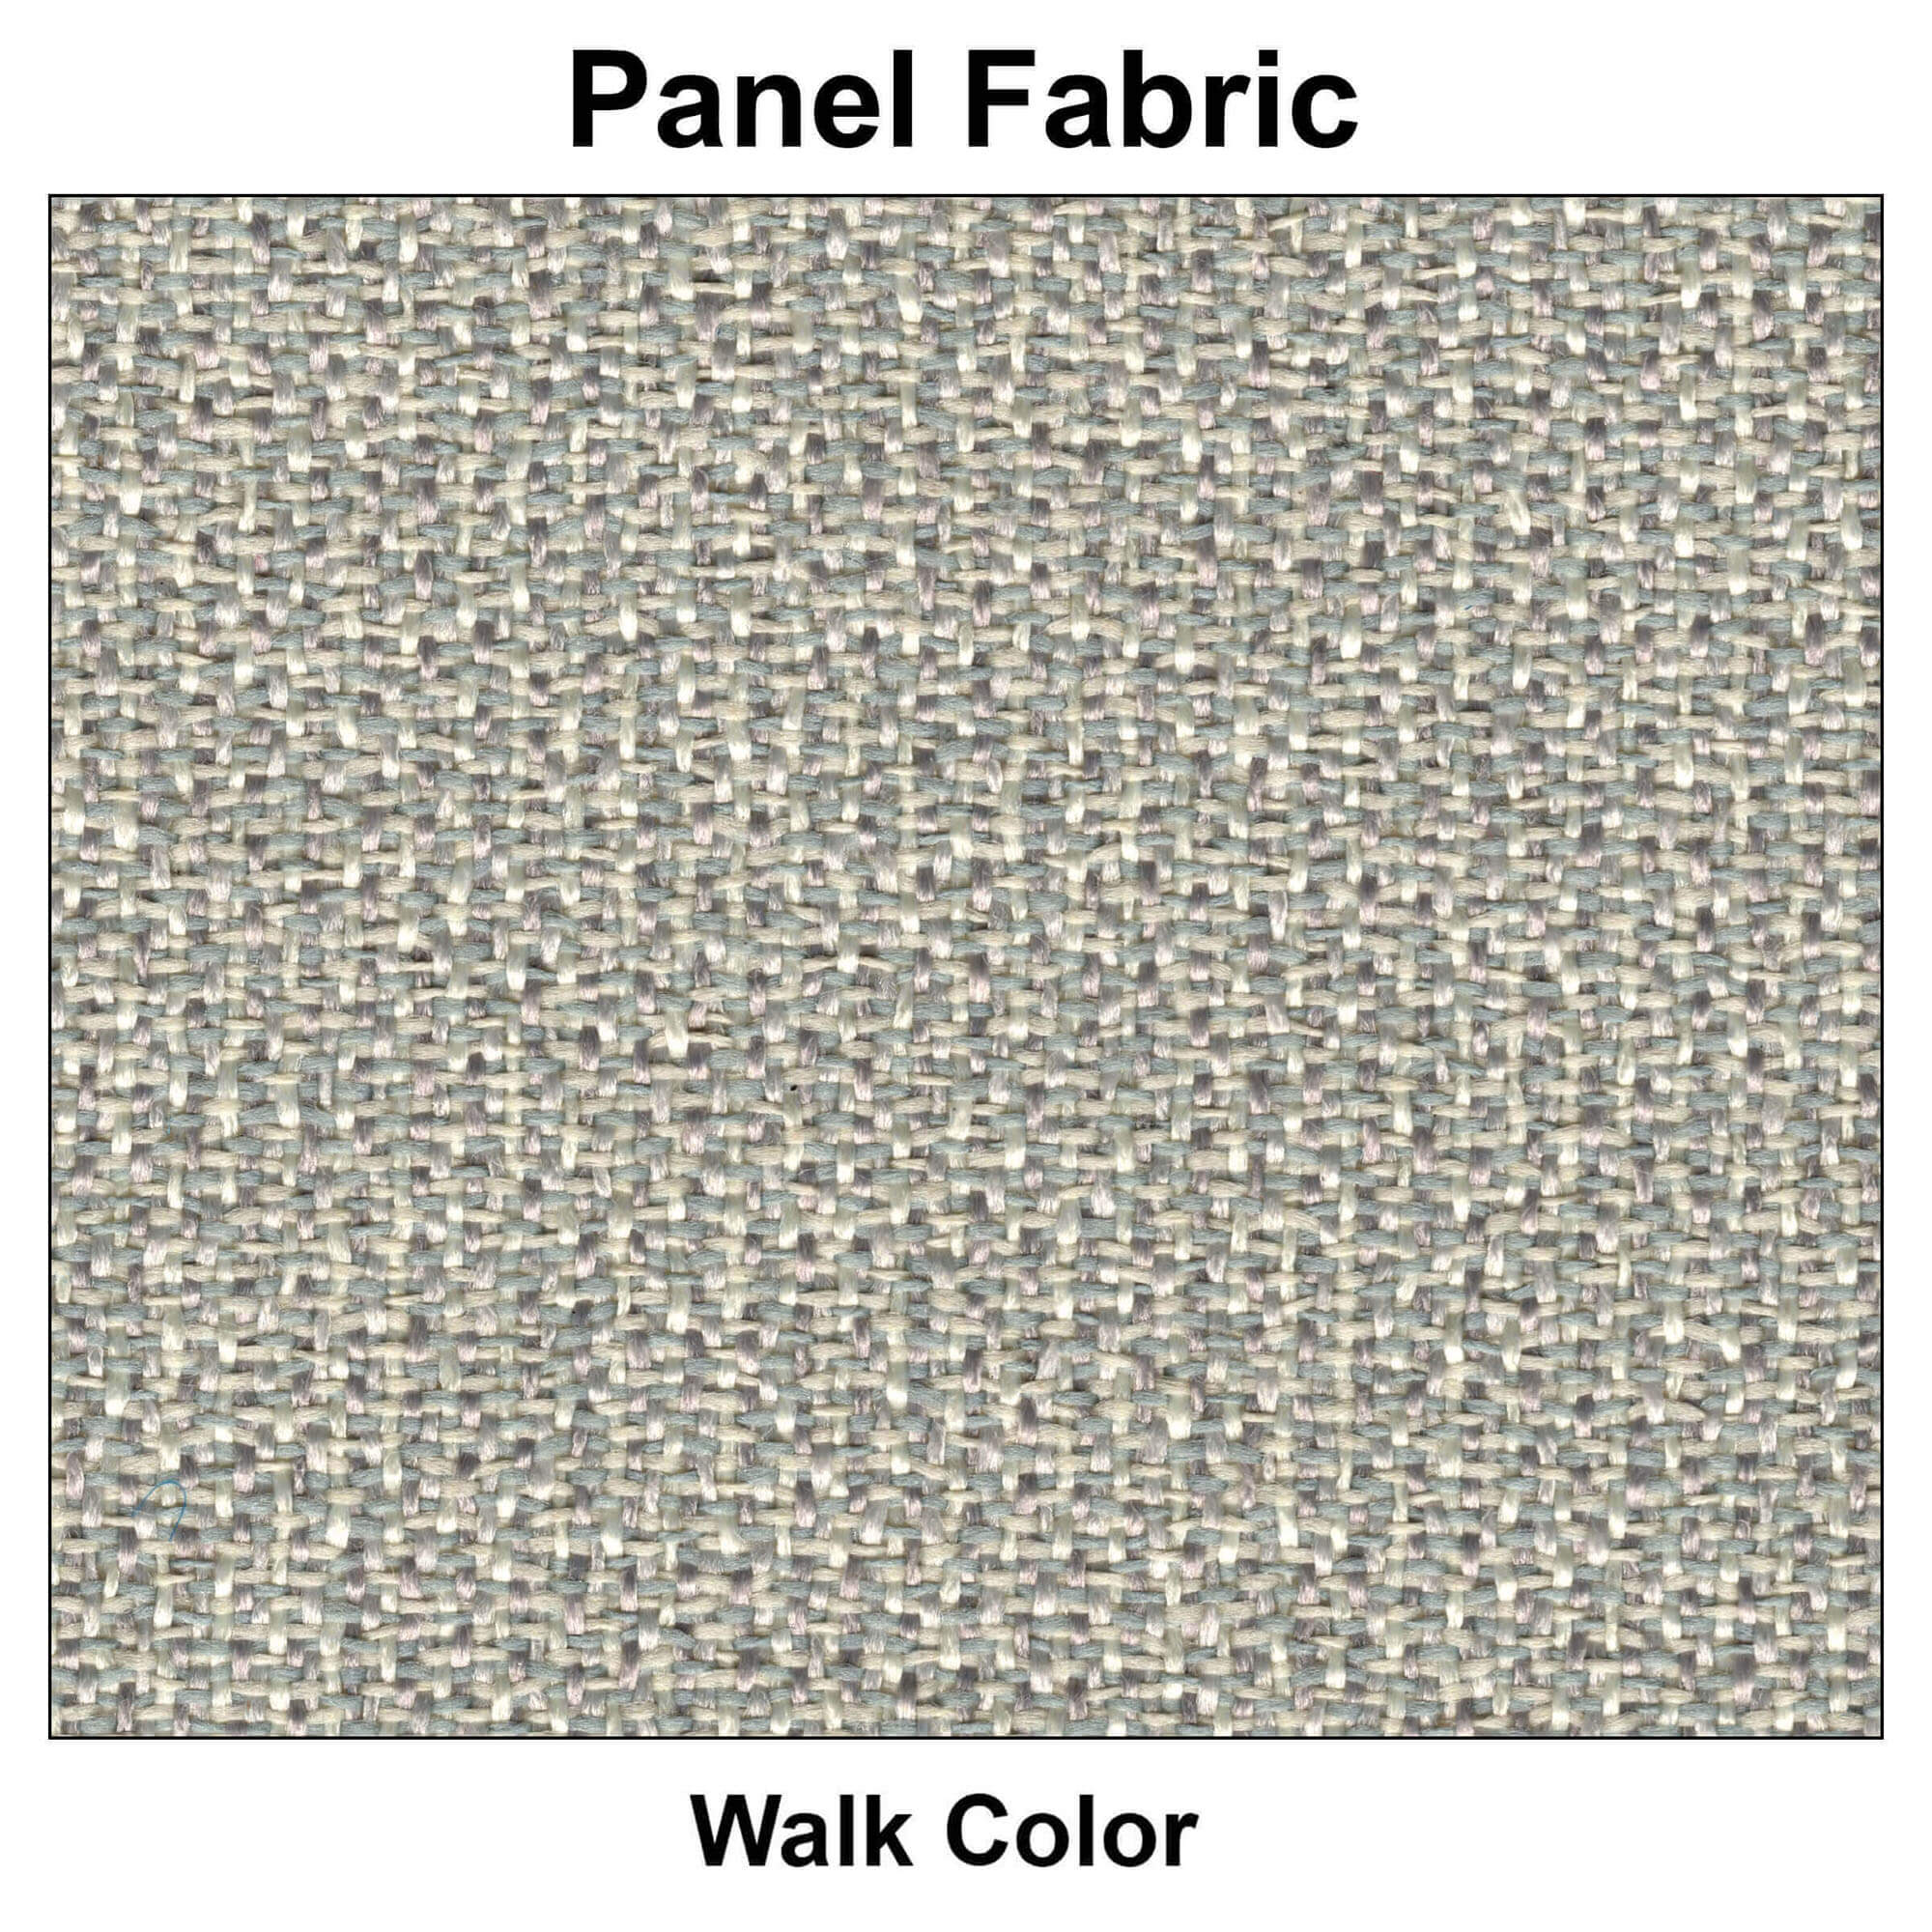 Modular office furniture panel fabric